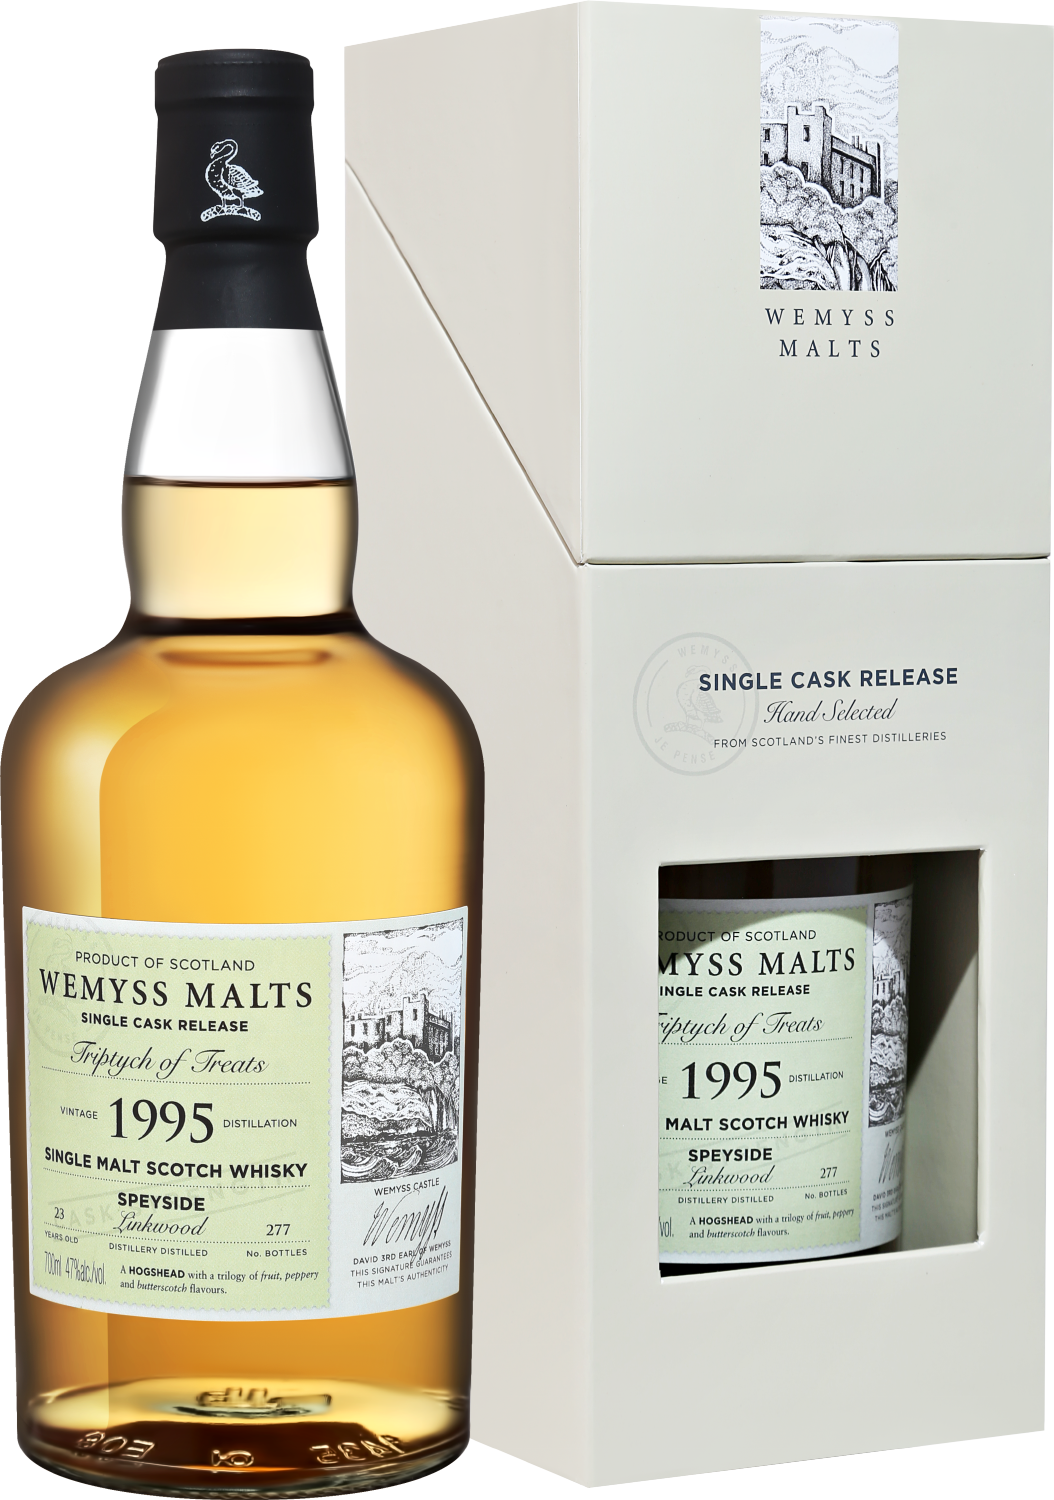 Wemyss Malts Triptych Of Treats Linkwood 1995 Speyside Single Cask Single Malt Scotch Whisky 23 y.o. (gift box)